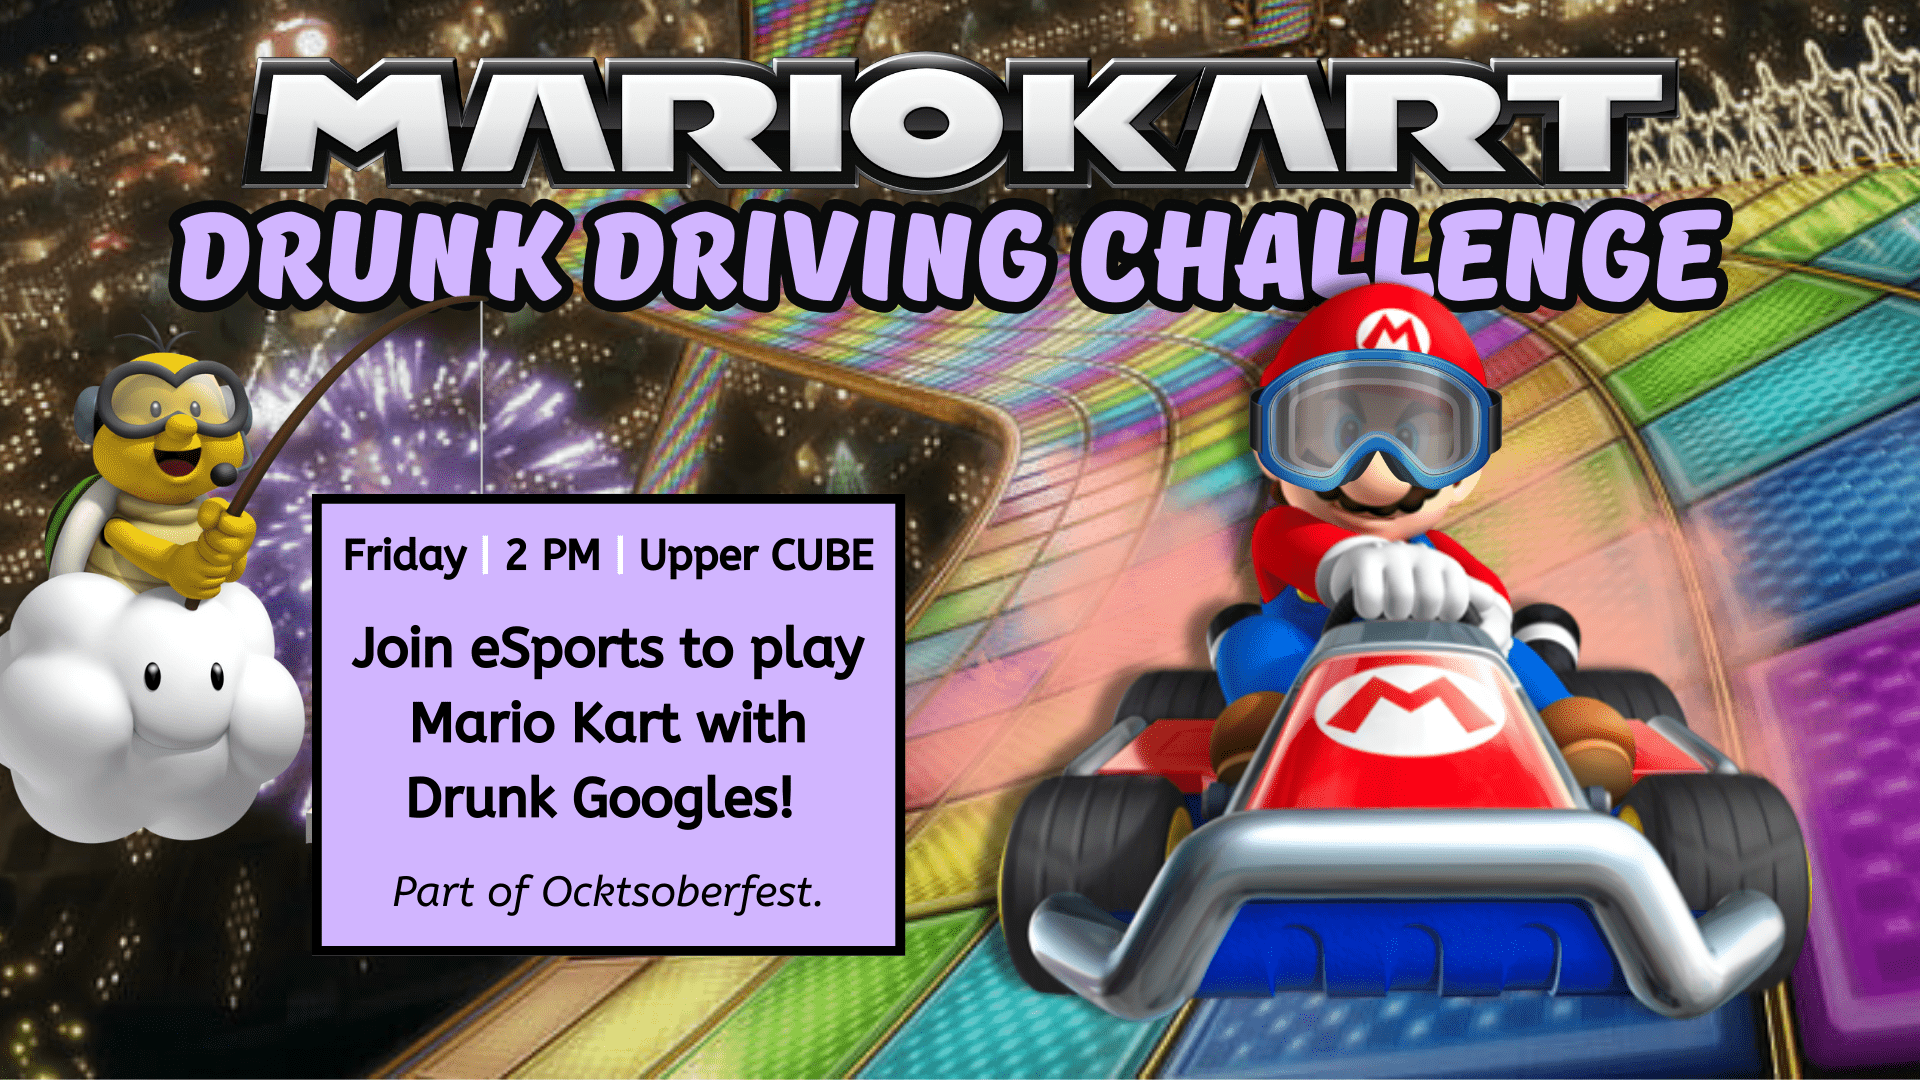 Mario Kart Drunk Driving Challenge